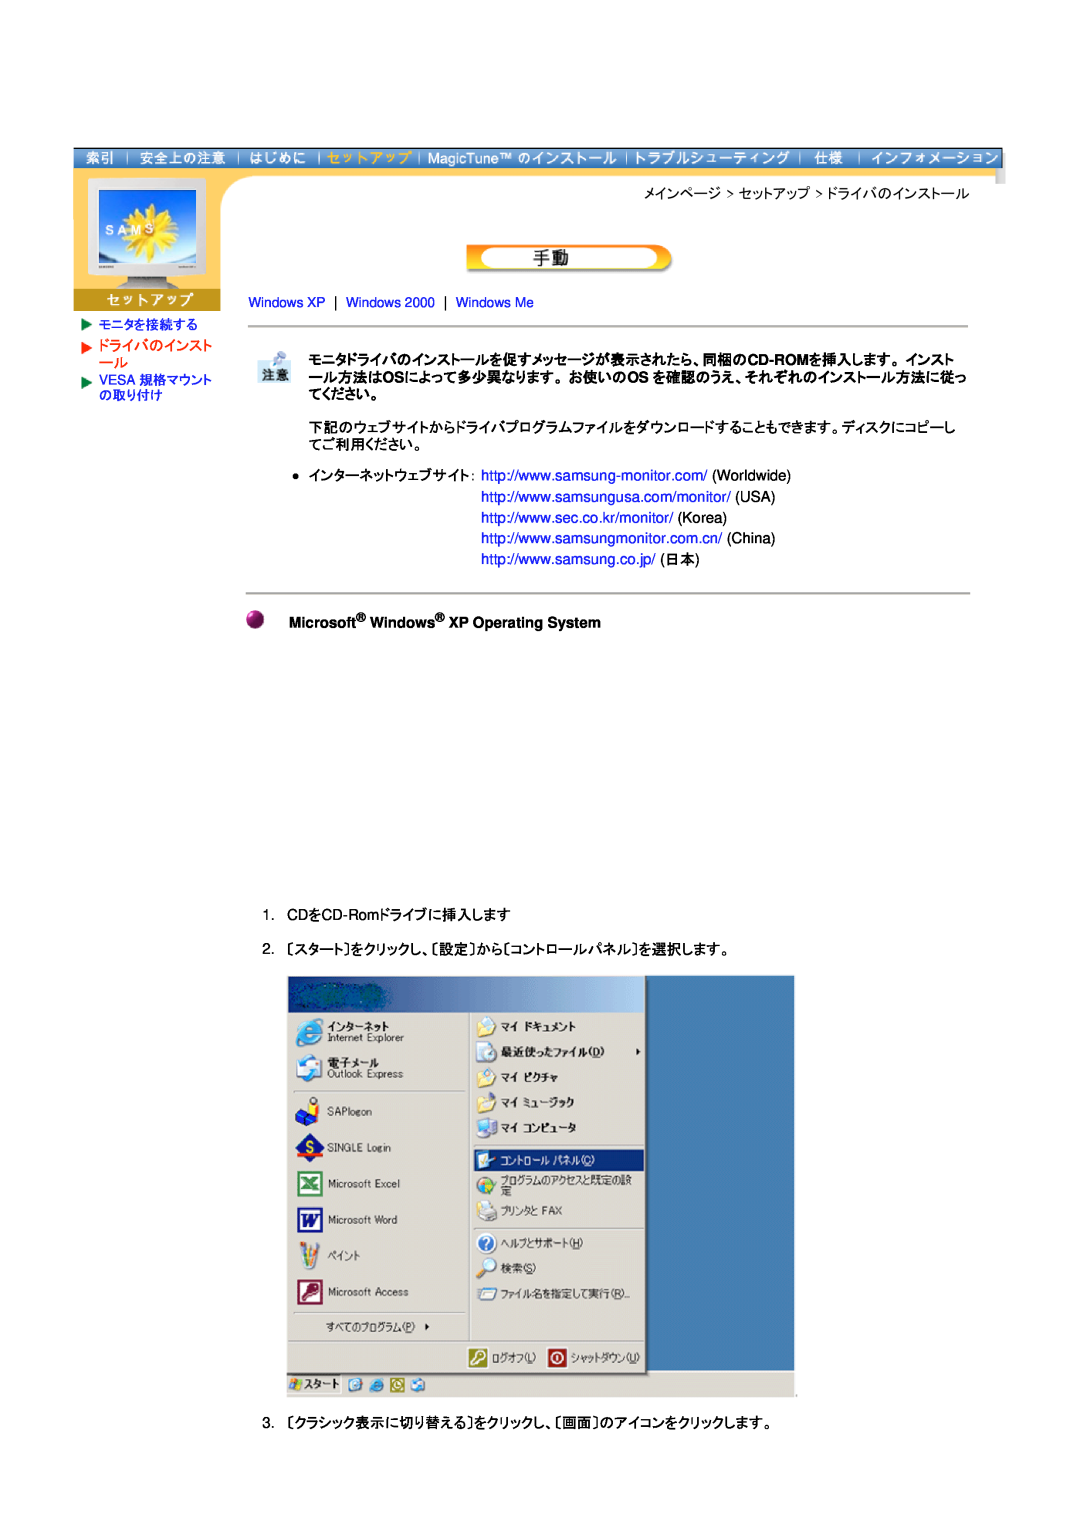 Samsung DI19PSQFV/XSJ manual ドライバのインスト ール, Microsoft Windows XP Operating System, Windows XP Windows 2000 Windows Me 